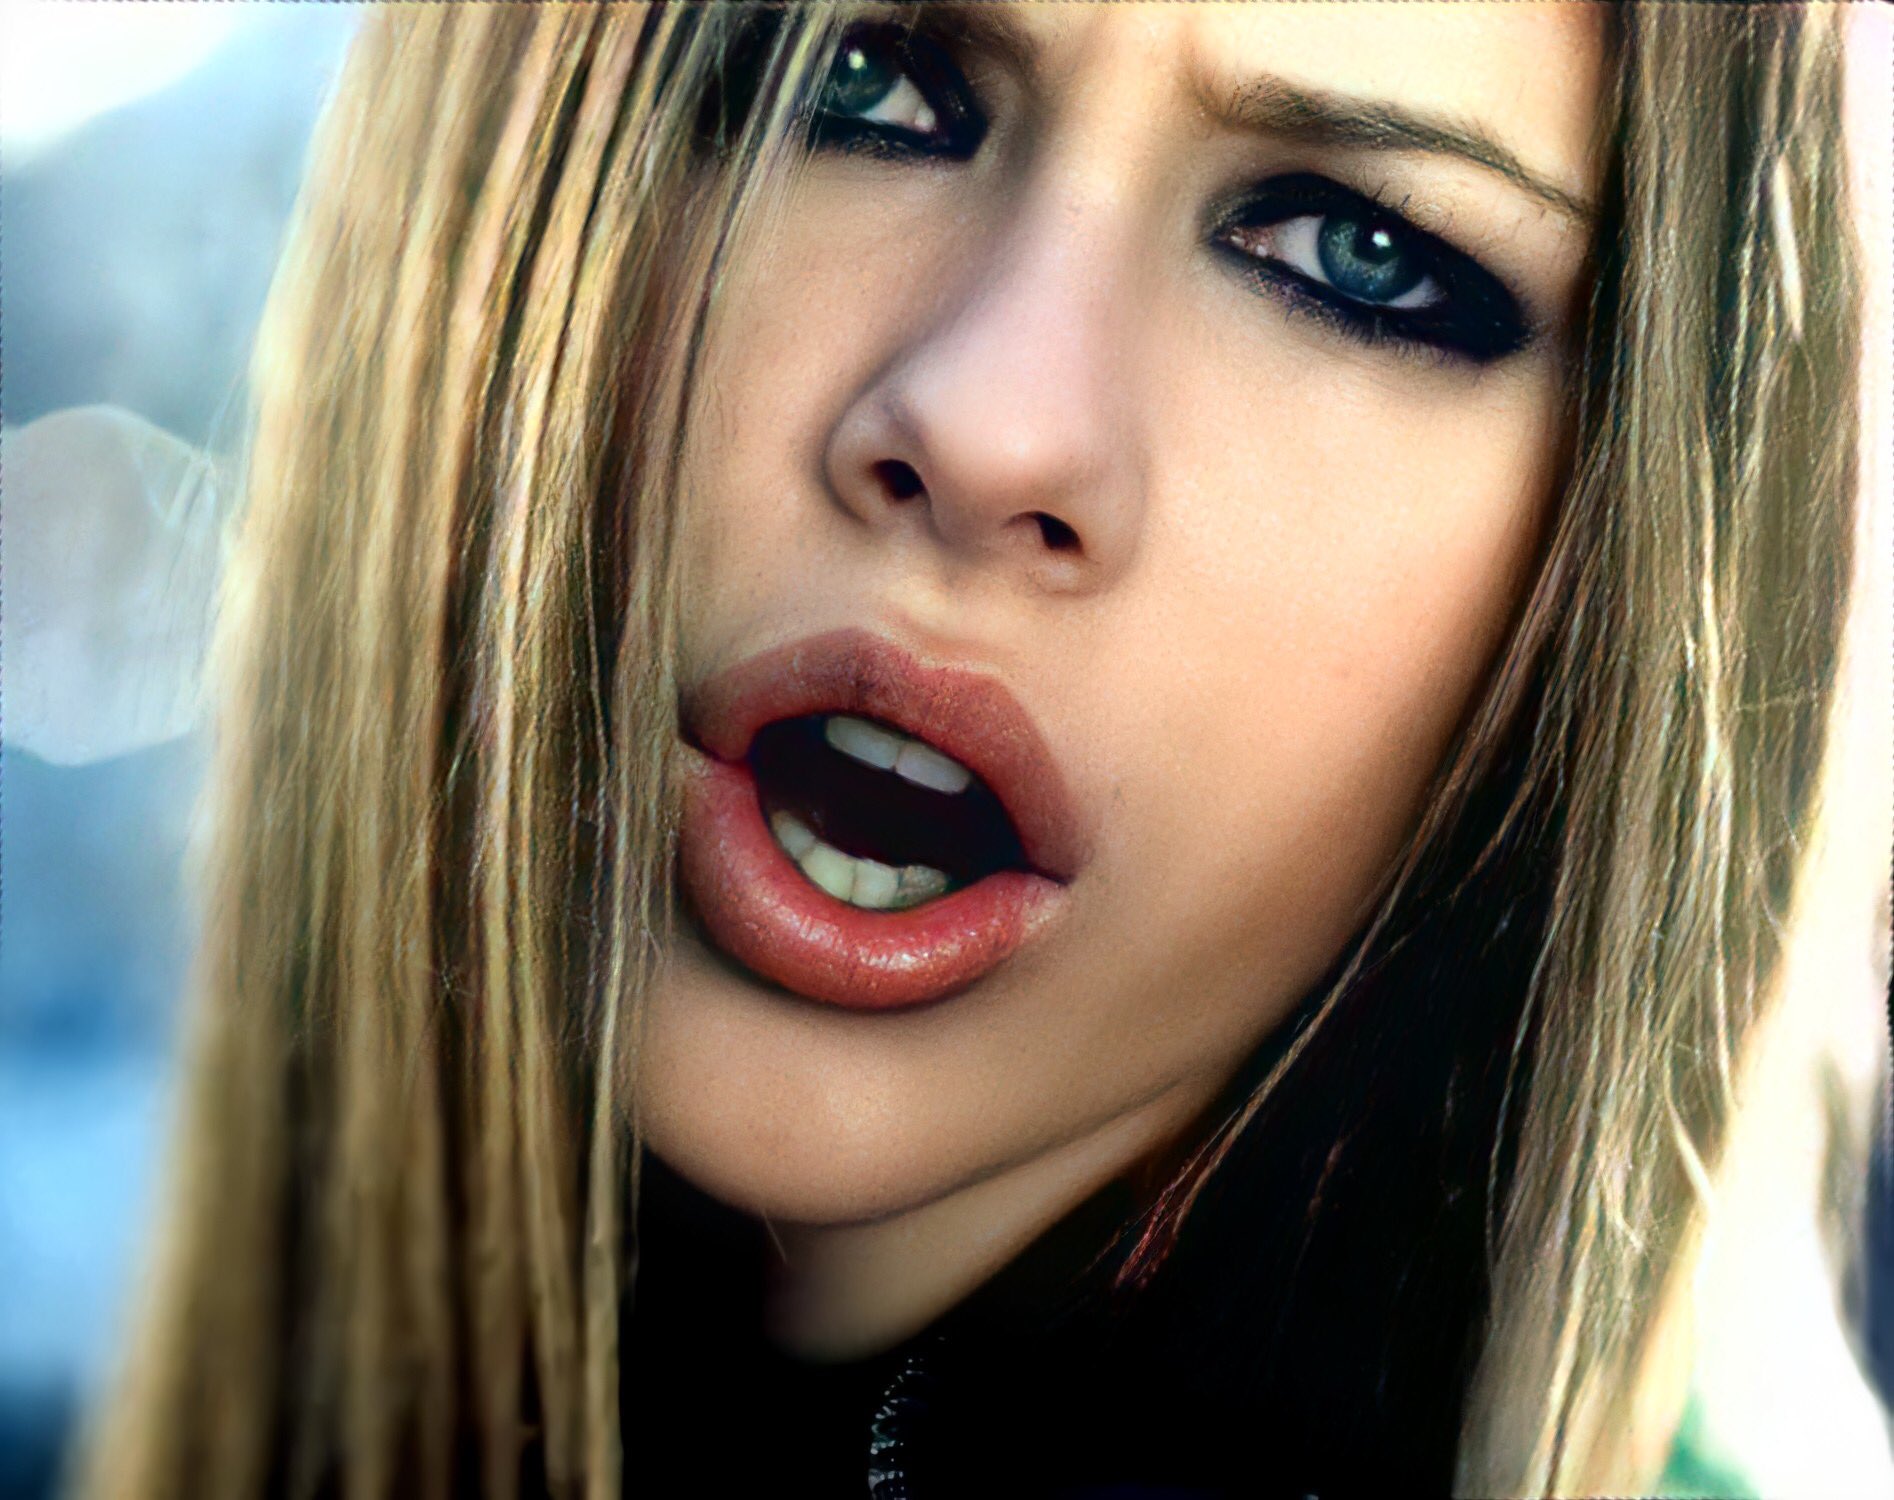 Avril Lavigne 2002 Sk8er Boi Taiwan OBI 3 Track Enhanced CD Single with  Video